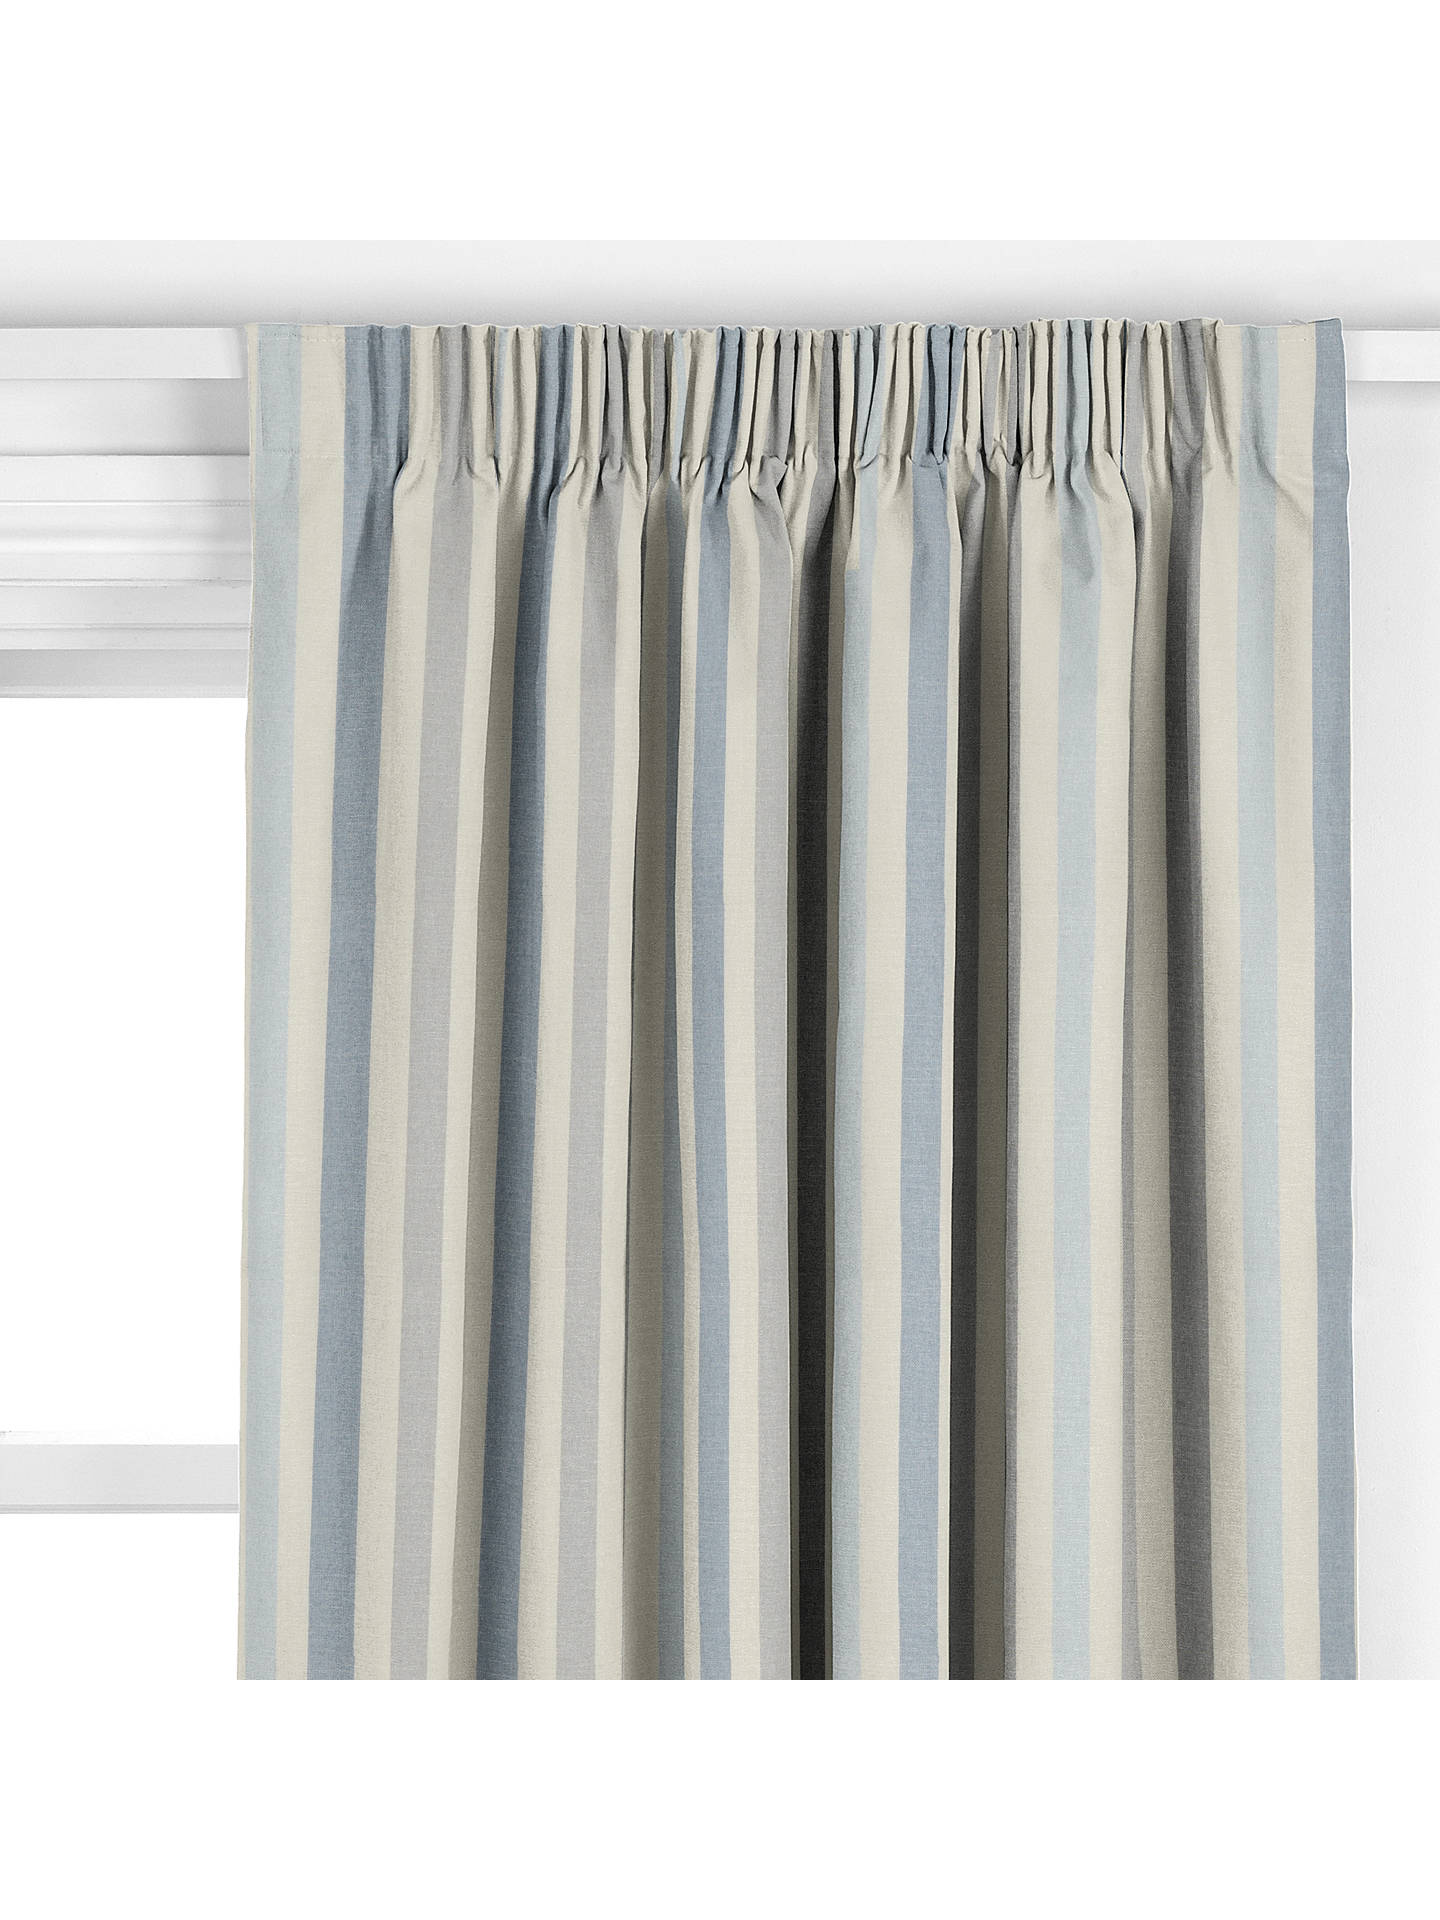 John Lewis Penzance Stripe Made To Measure Curtains Or Roman Blind Blue